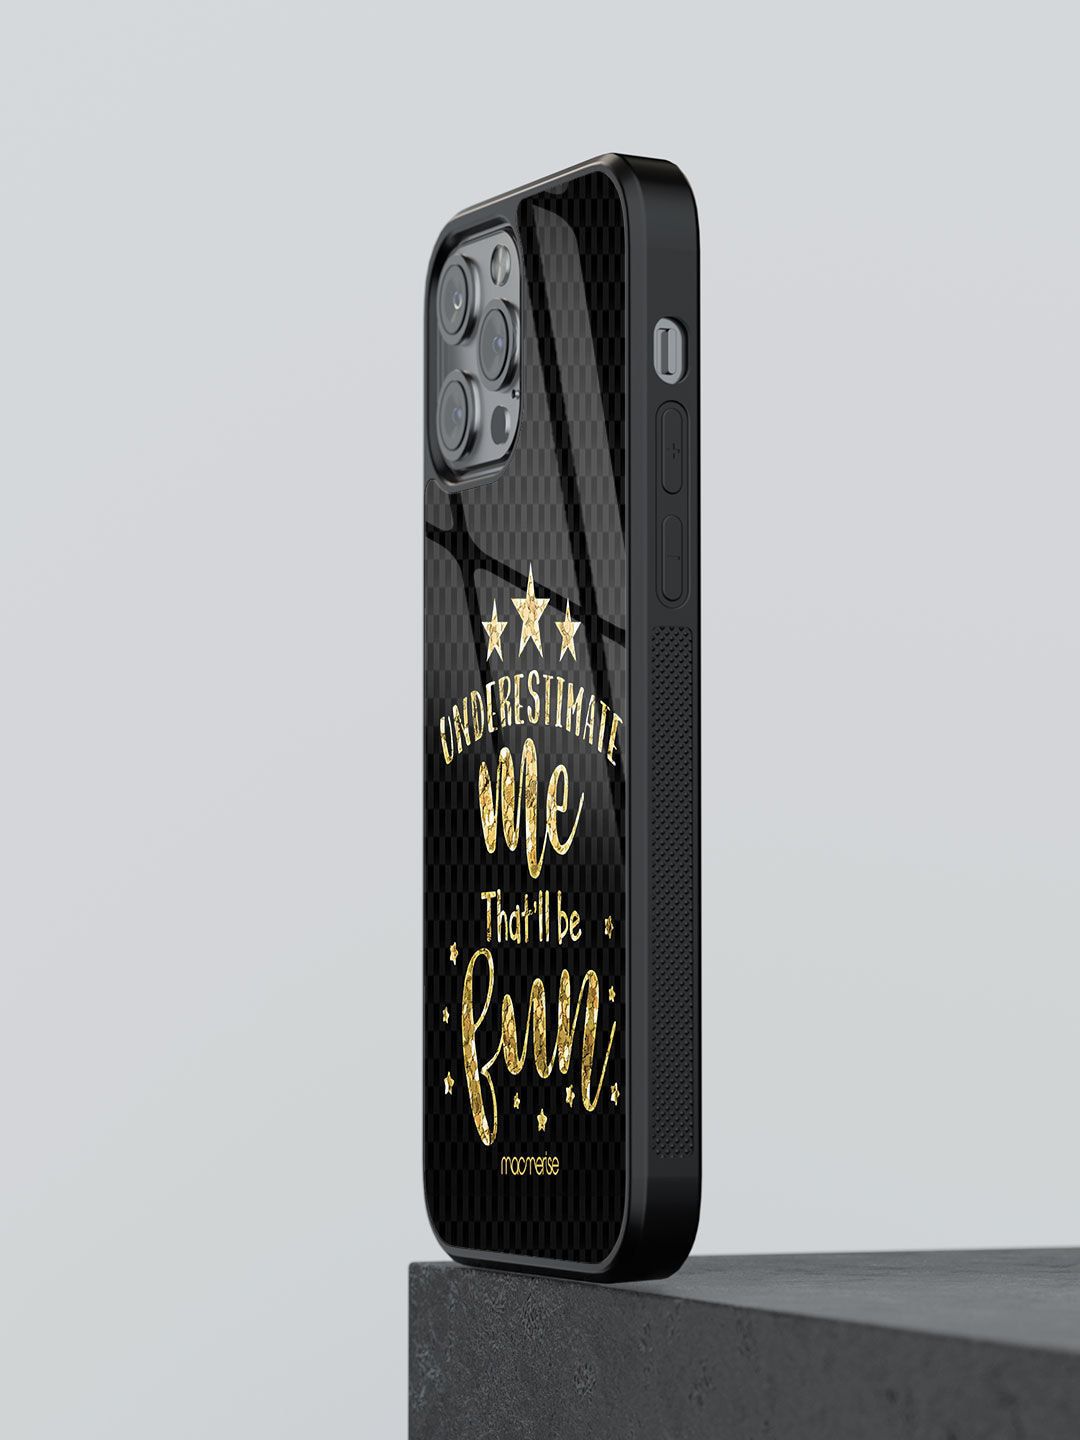 macmerise Black & Gold Printed iPhone 12 Pro Max Back Case Price in India